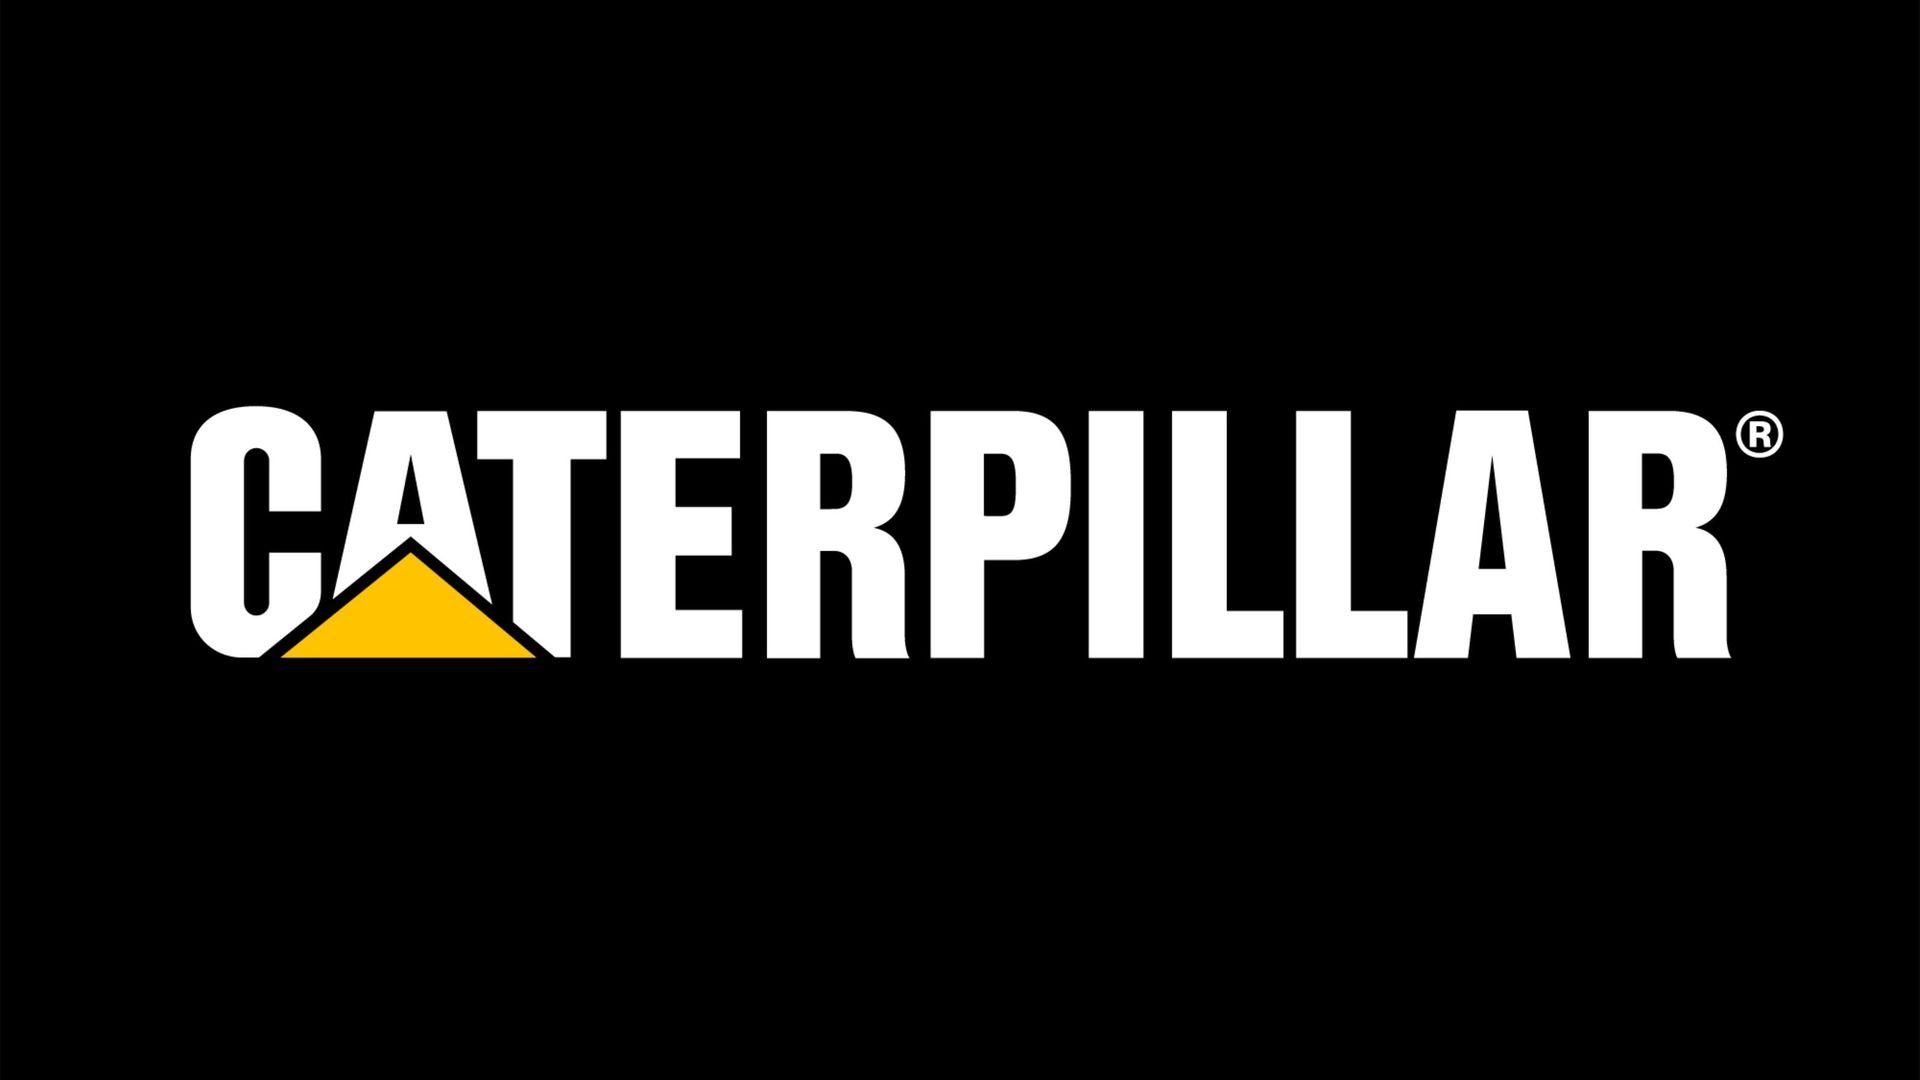 Black Caterpillar Logo - Caterpillar Brand Logo and Black Background Wallpaper - Wallpaper Stream